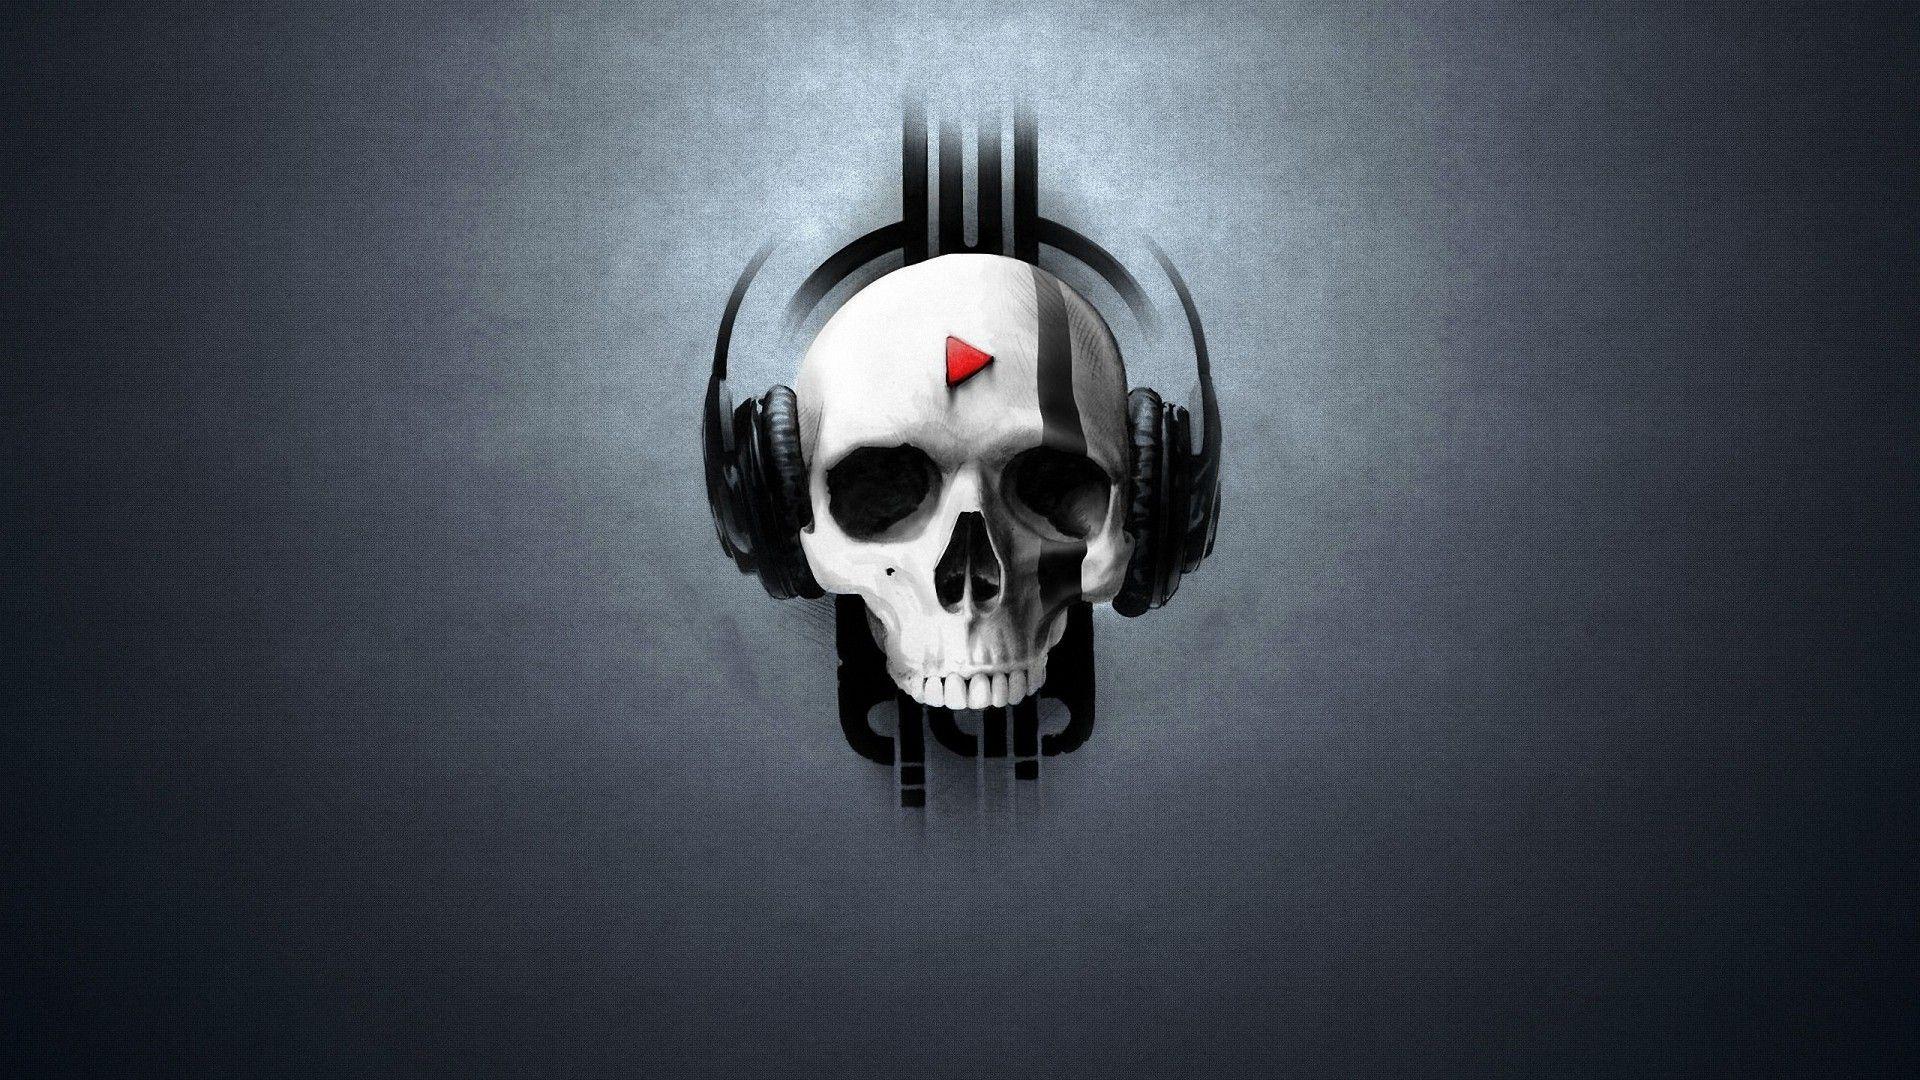 Free 1920x1080 Music Artistic Skull Wallpaper Full HD 1080p Background